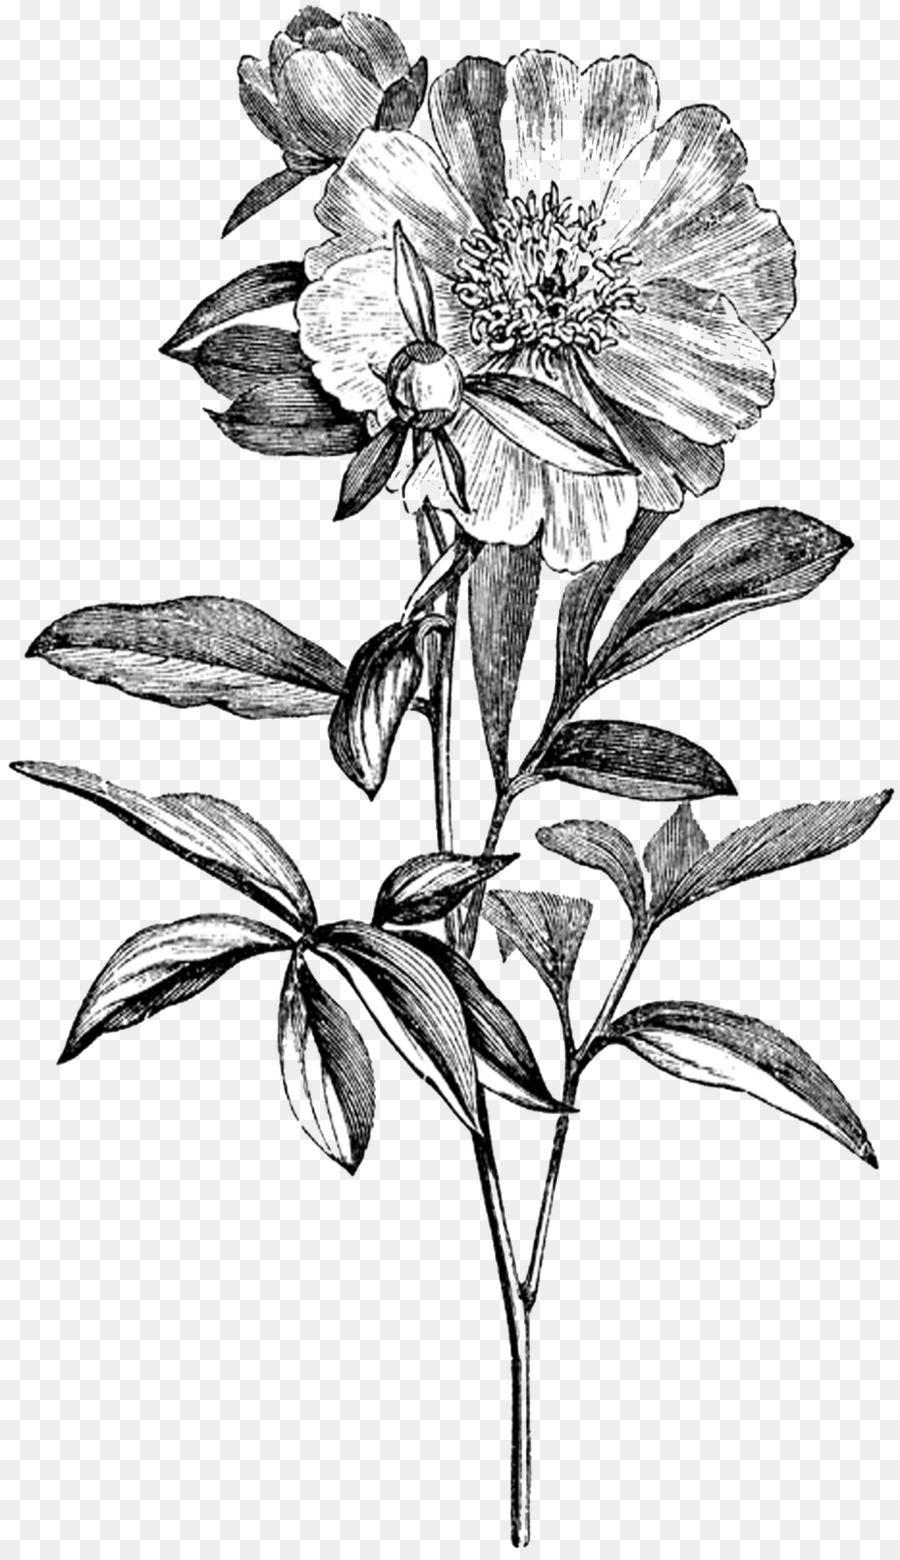 Peony Botany Drawing Clip art - botanical png download - 929*1600 - Free Transparent Peony png Download.